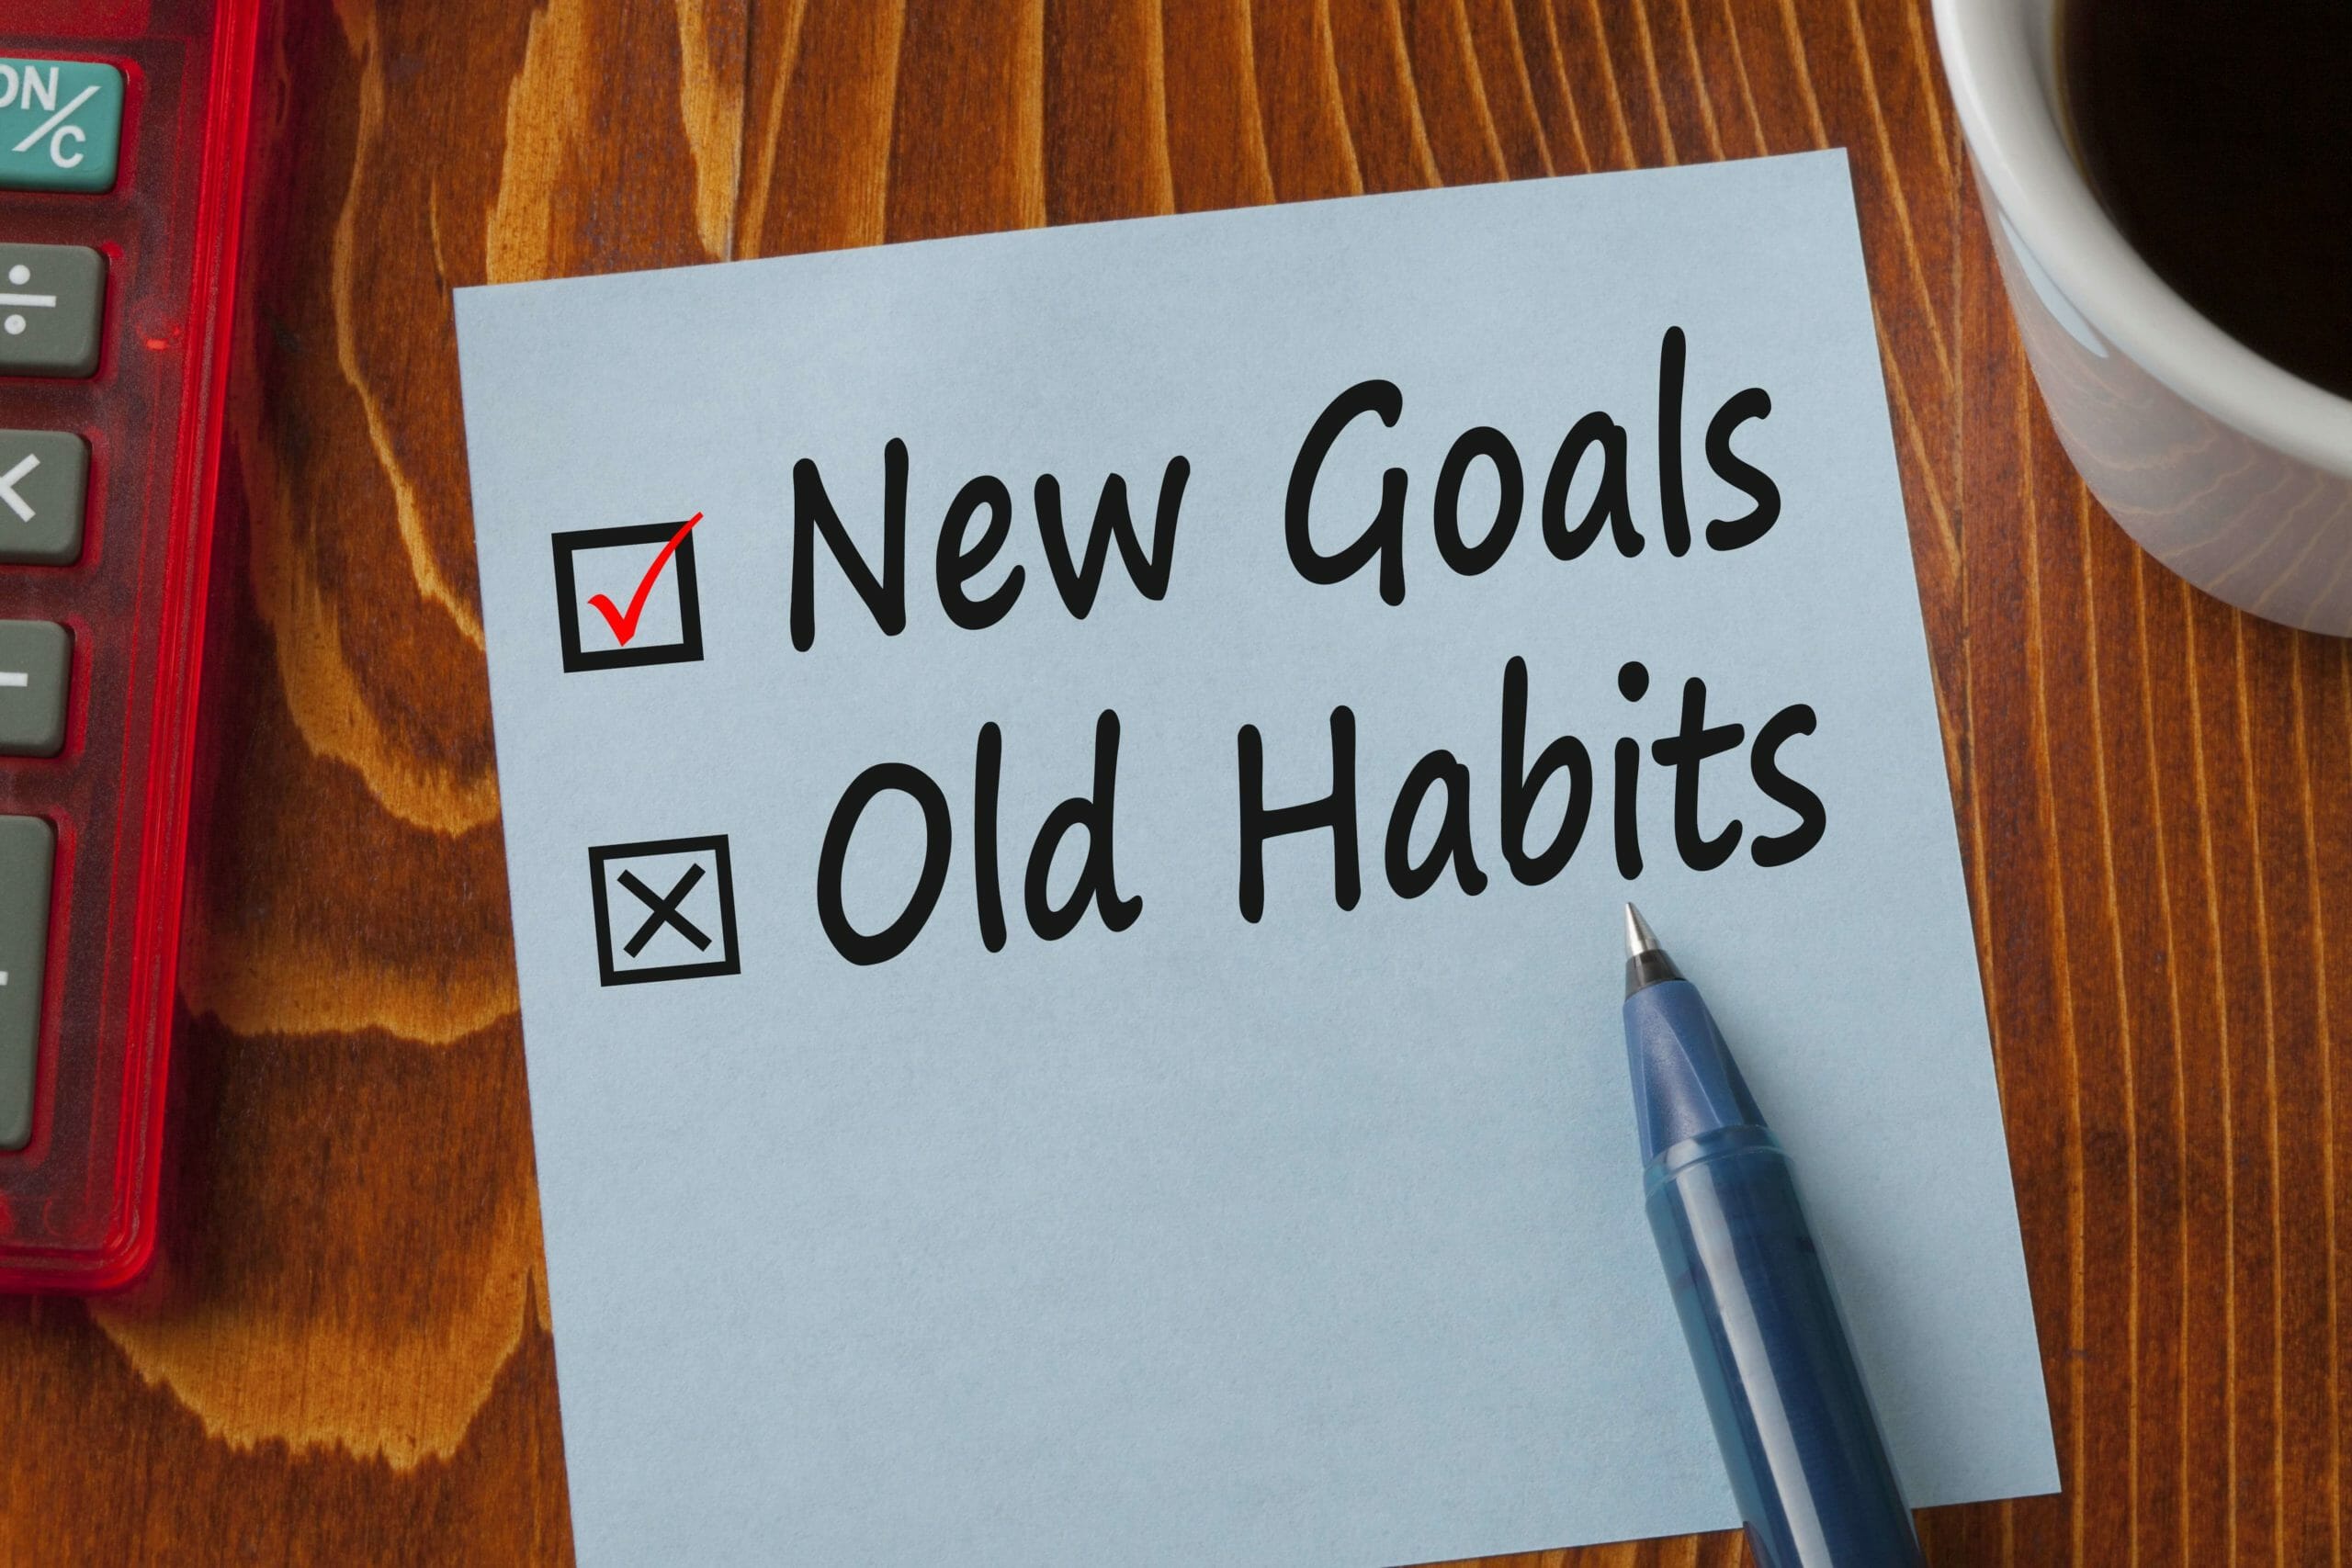 new goals notebook depicting healthy coping skills